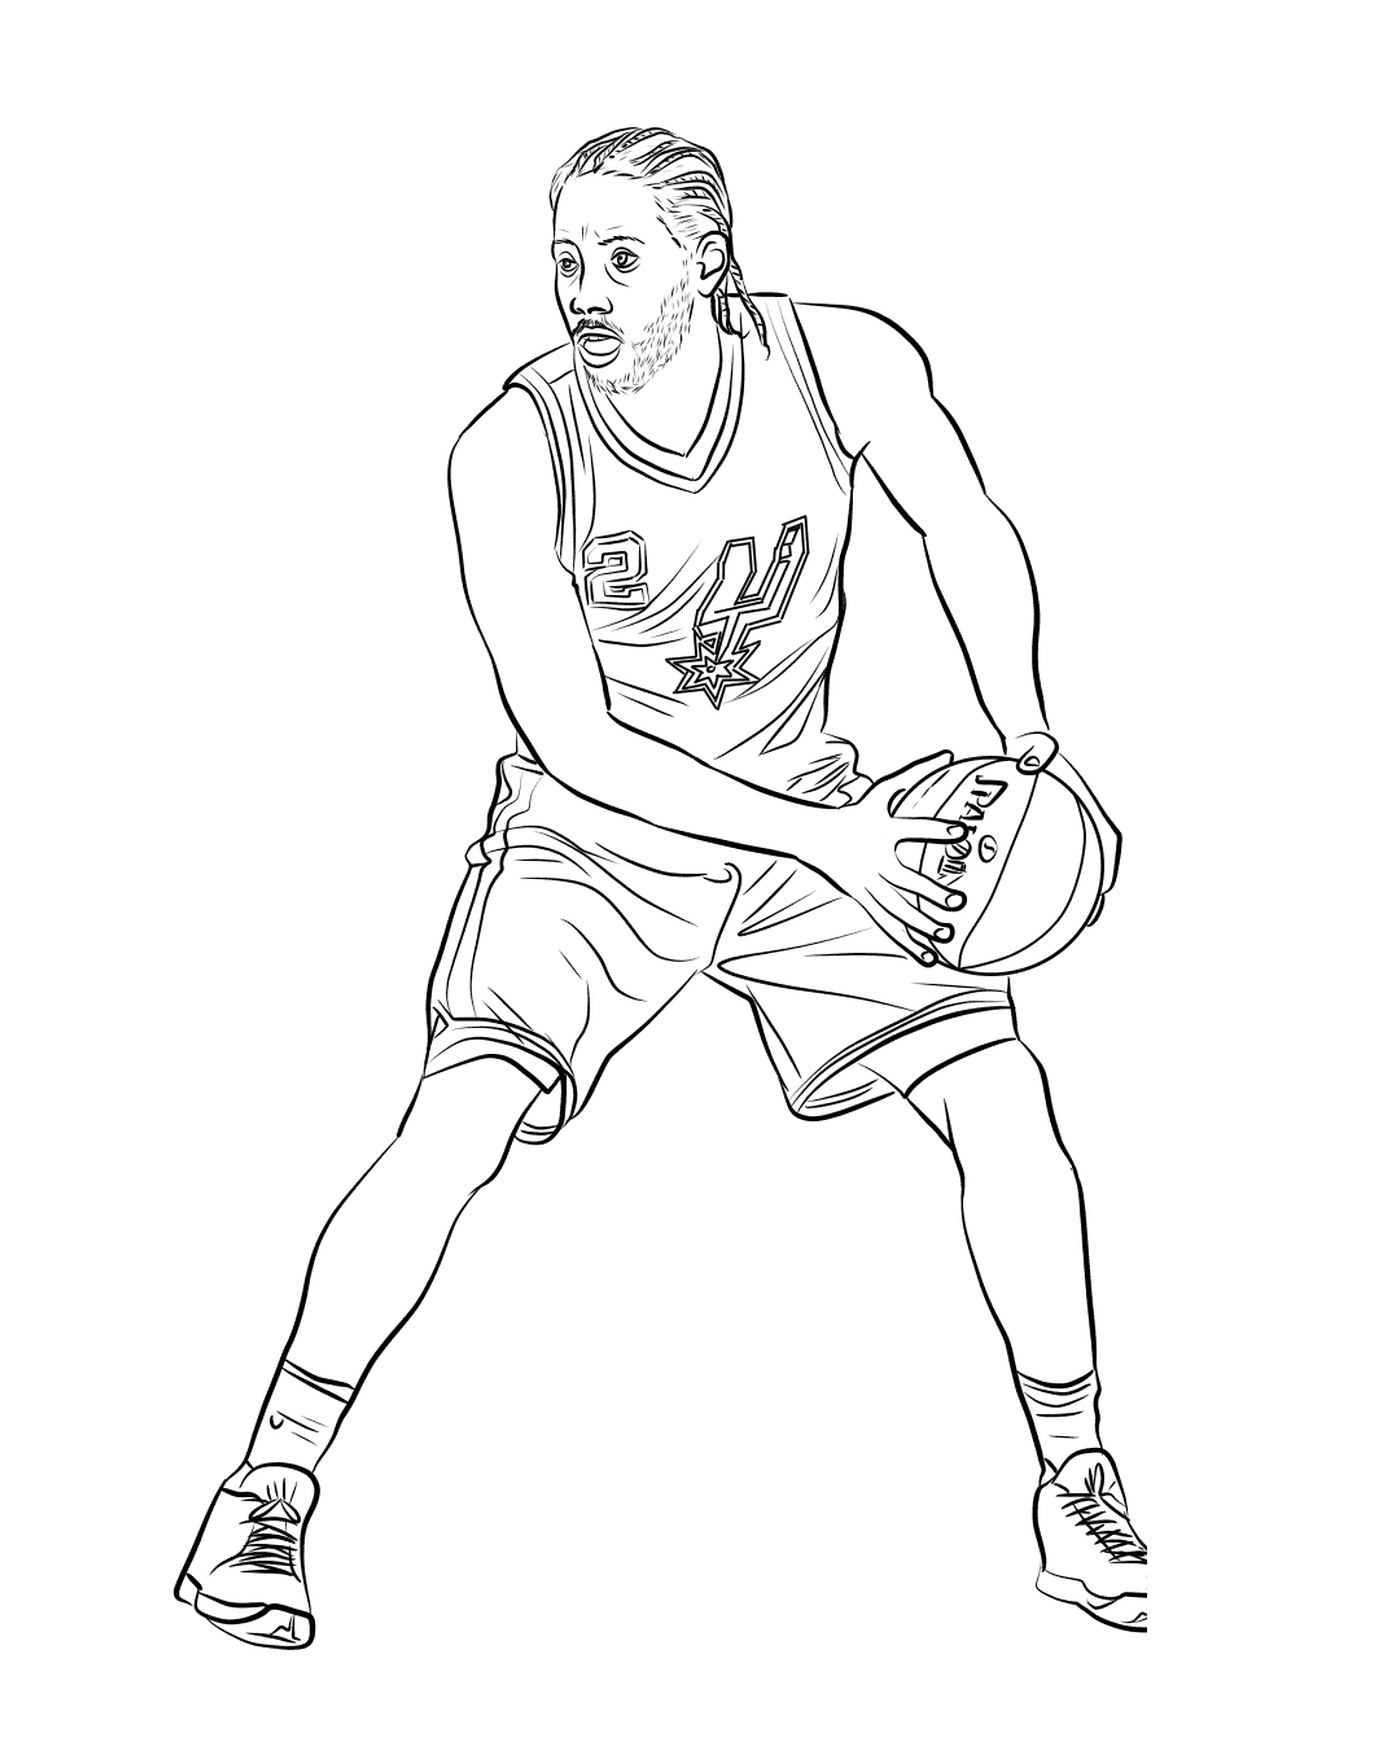   Kawhi Leonard, joueur de basket 